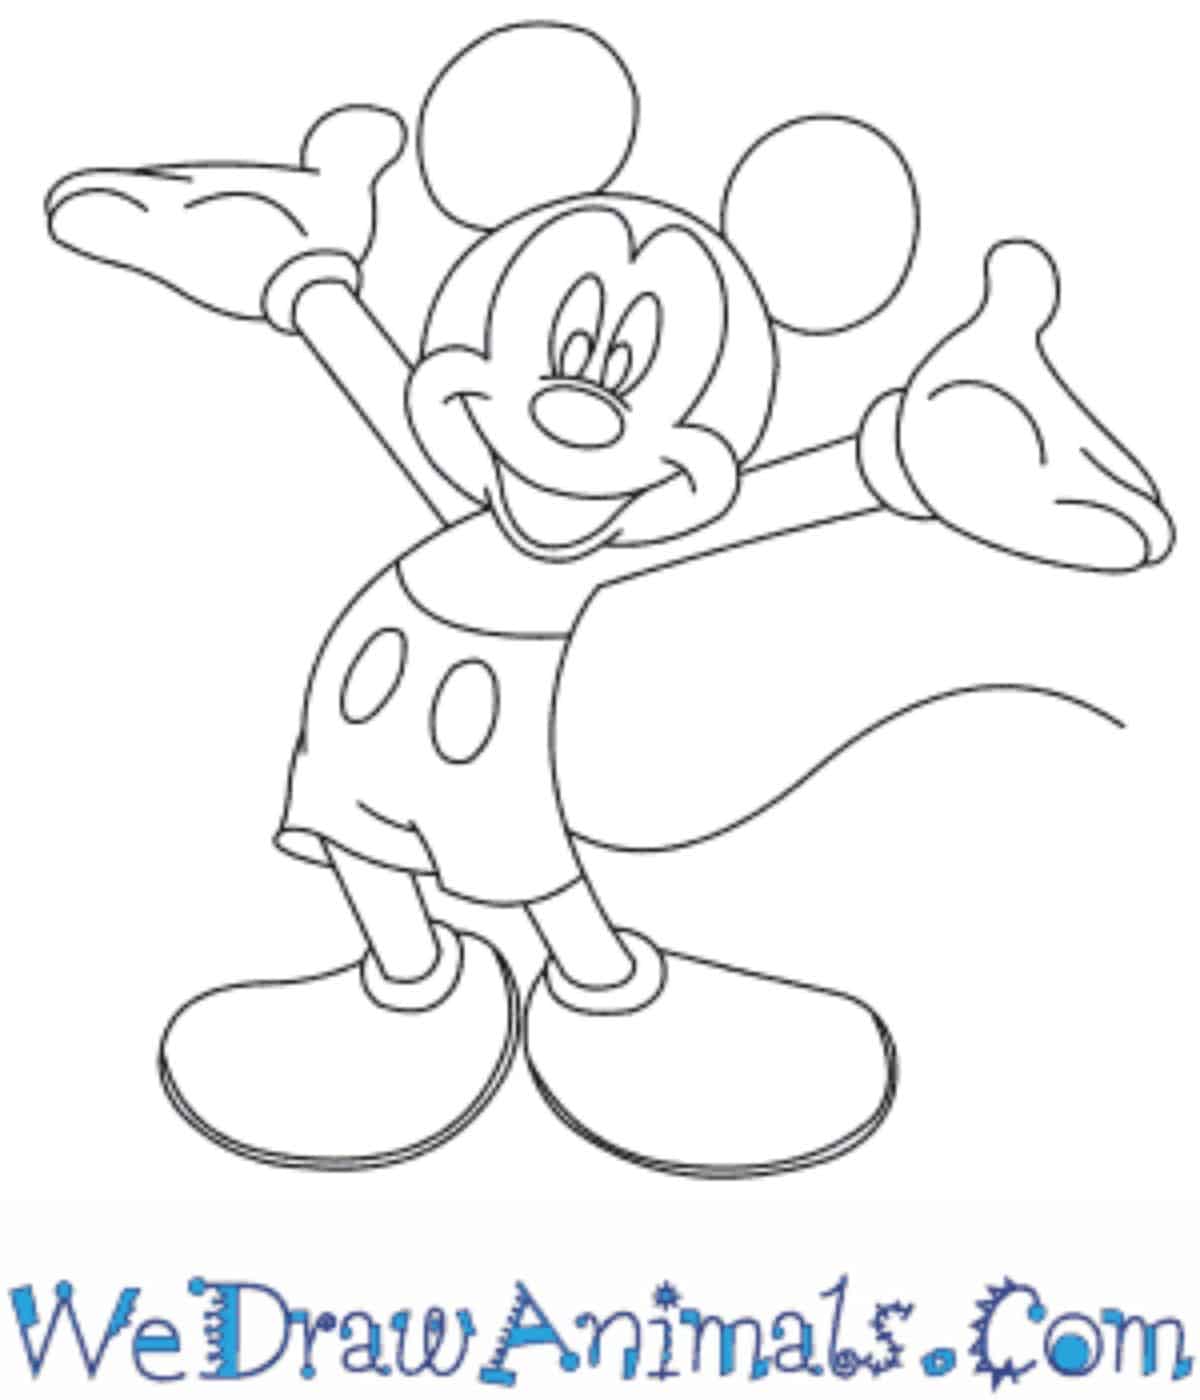 How to Draw Mickey Mouse-saigonsouth.com.vn